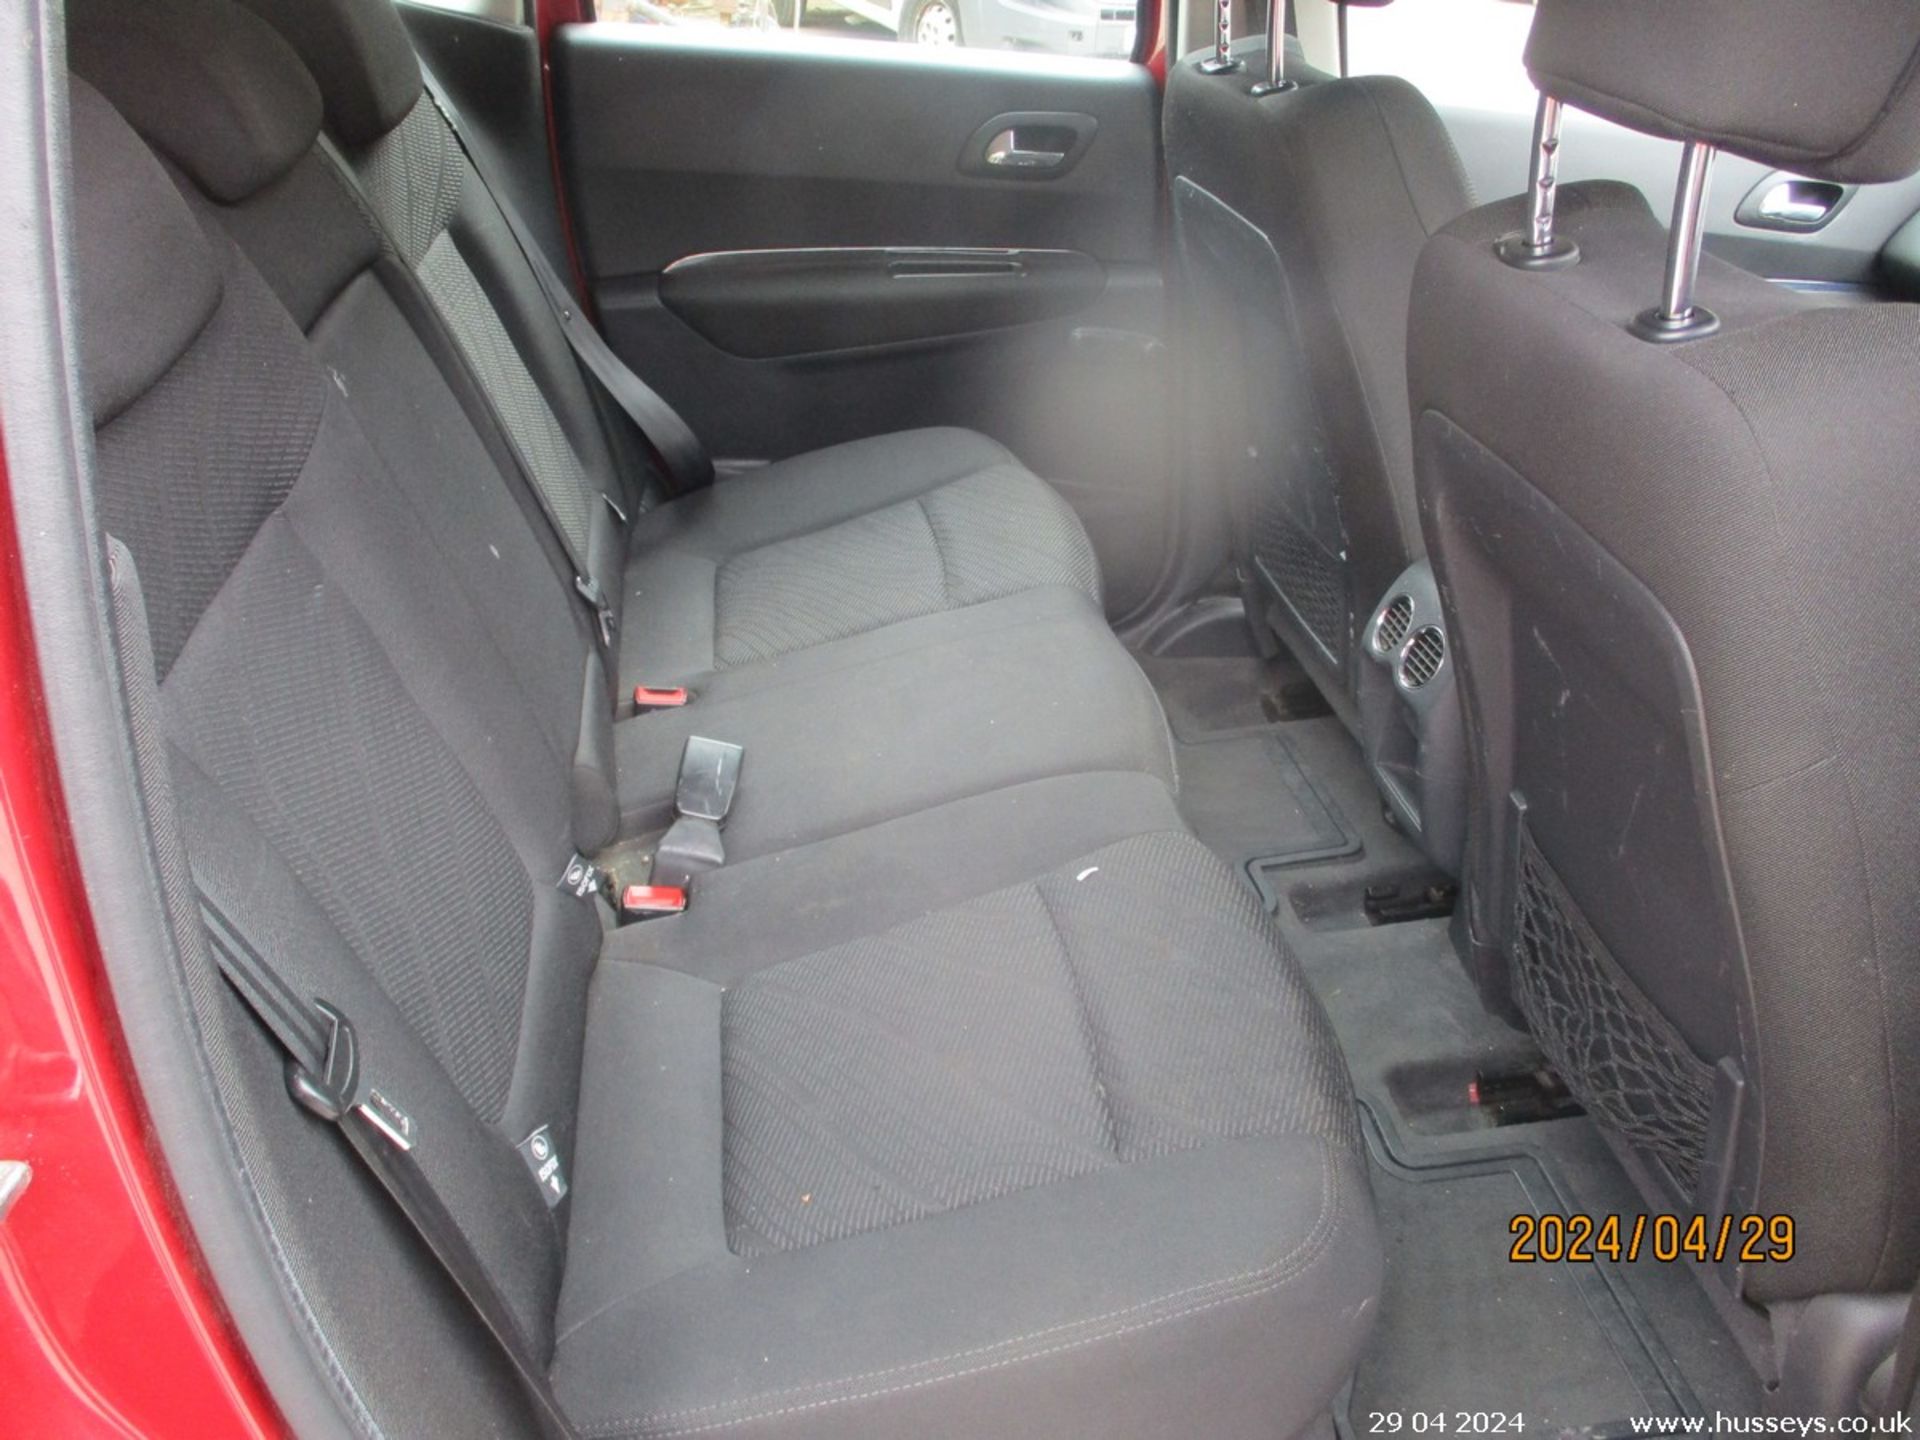 10/10 PEUGEOT 3008 ACTIVE HDI - 1560cc 5dr Hatchback (Red, 132k) - Image 11 of 20